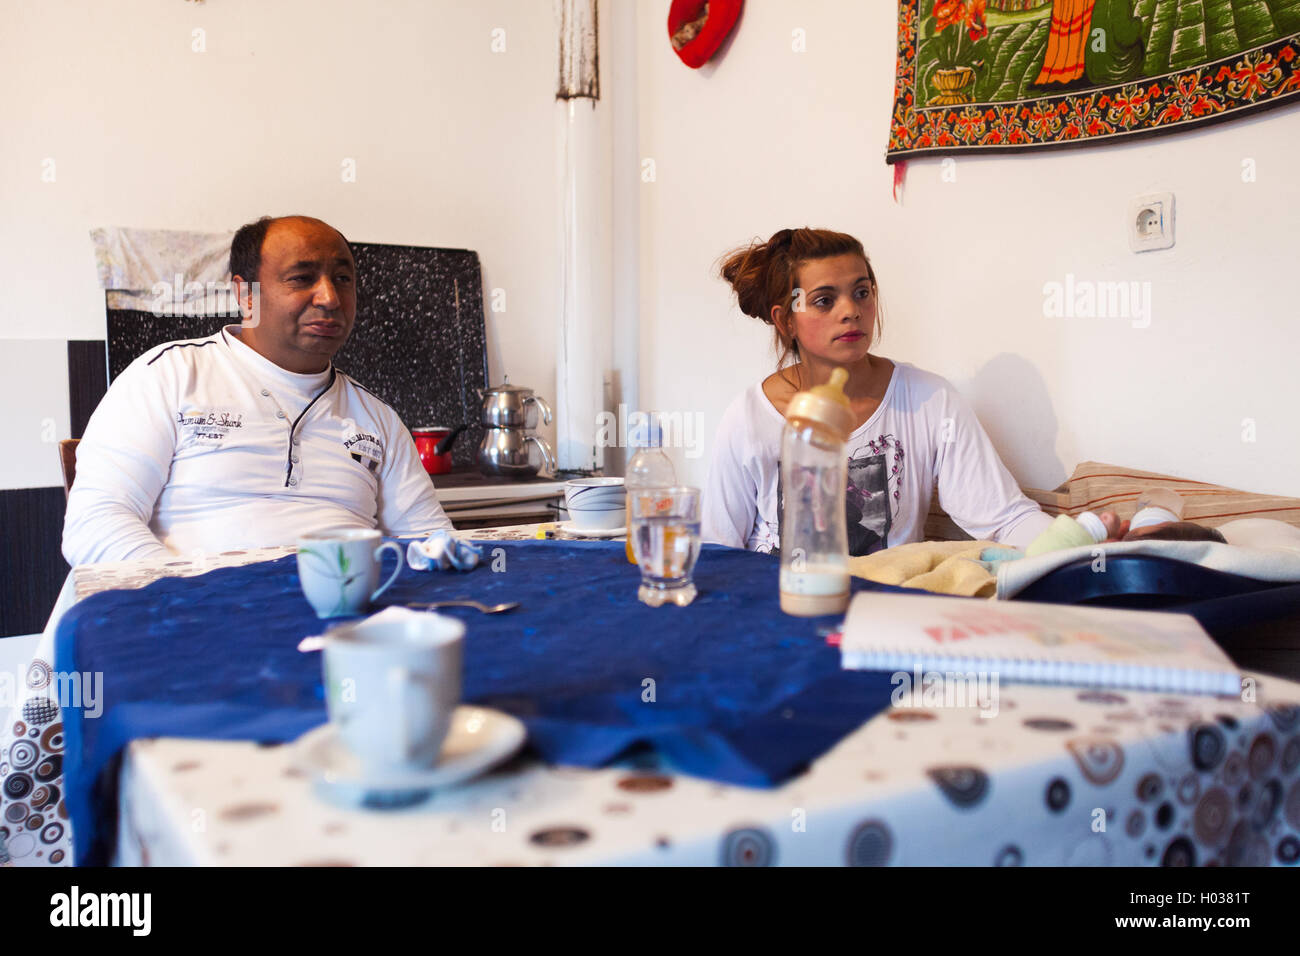 ZAGREB, CROATIA - NOVEMBER 12, 2013: Roma family sitting at kitchen table at their home. Stock Photo